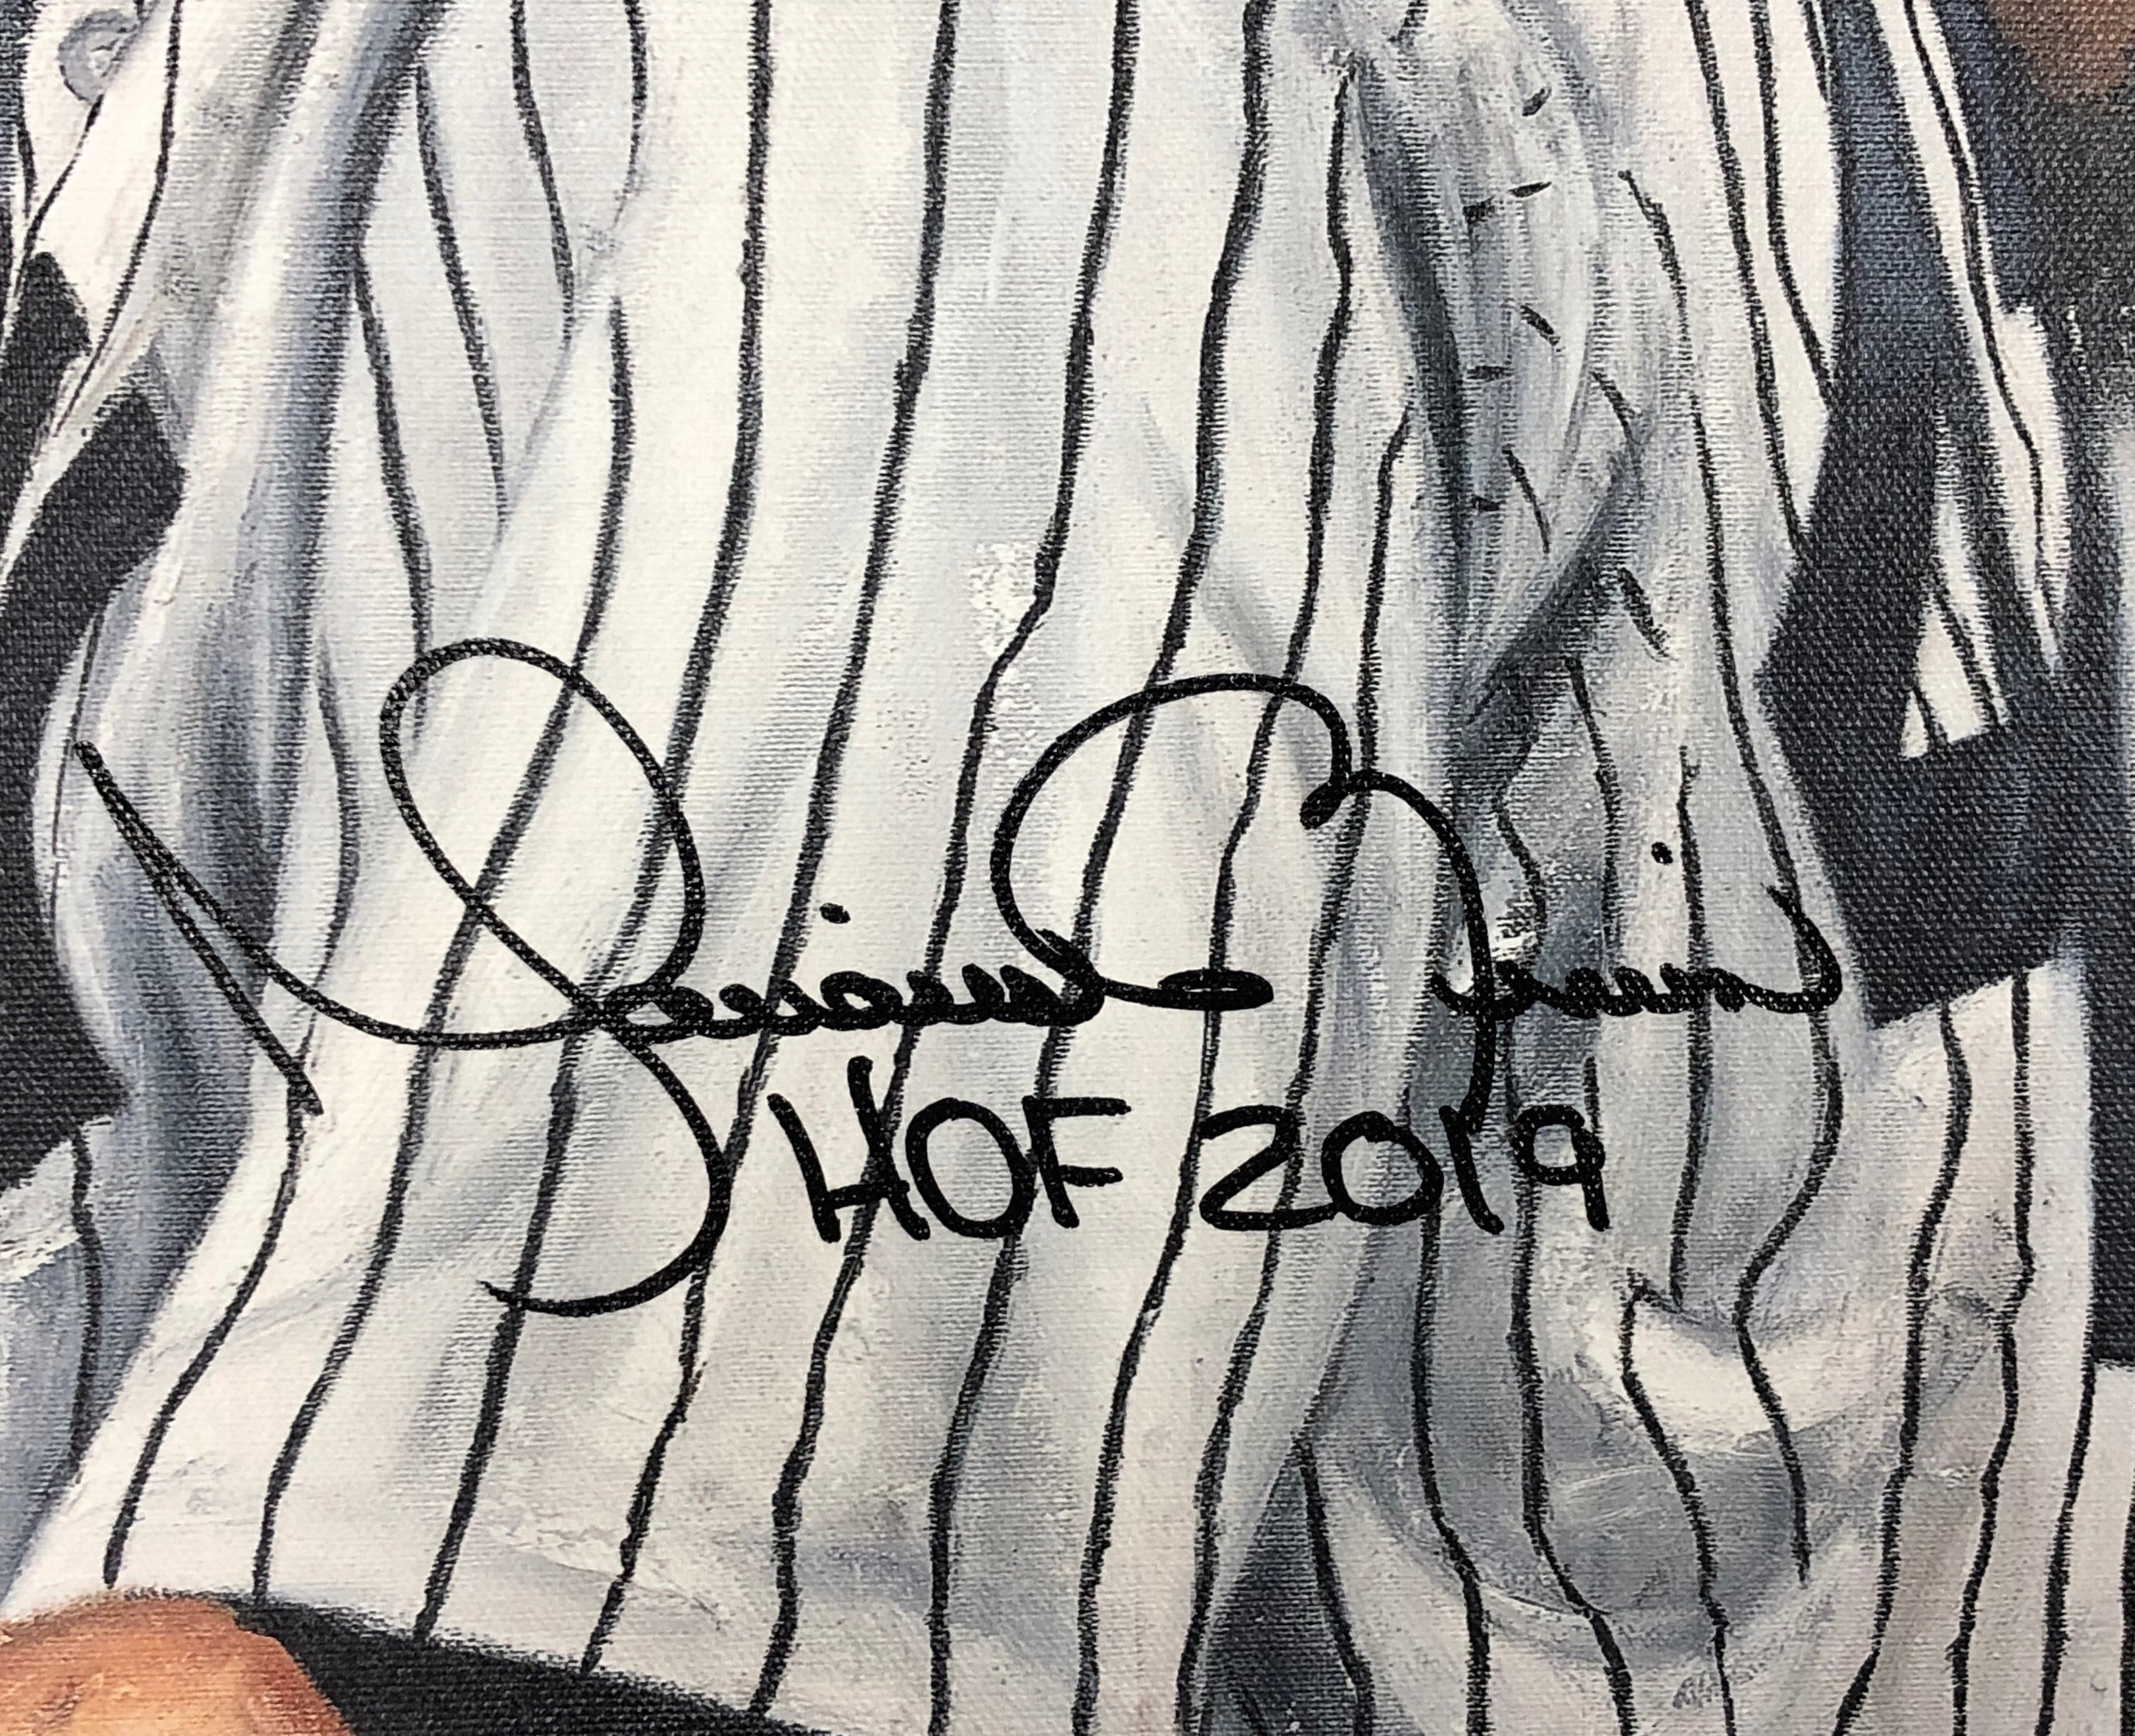 2019 Signed NY Yankees Mariano Rivera HOF Jersey limited edition # 17 of 42